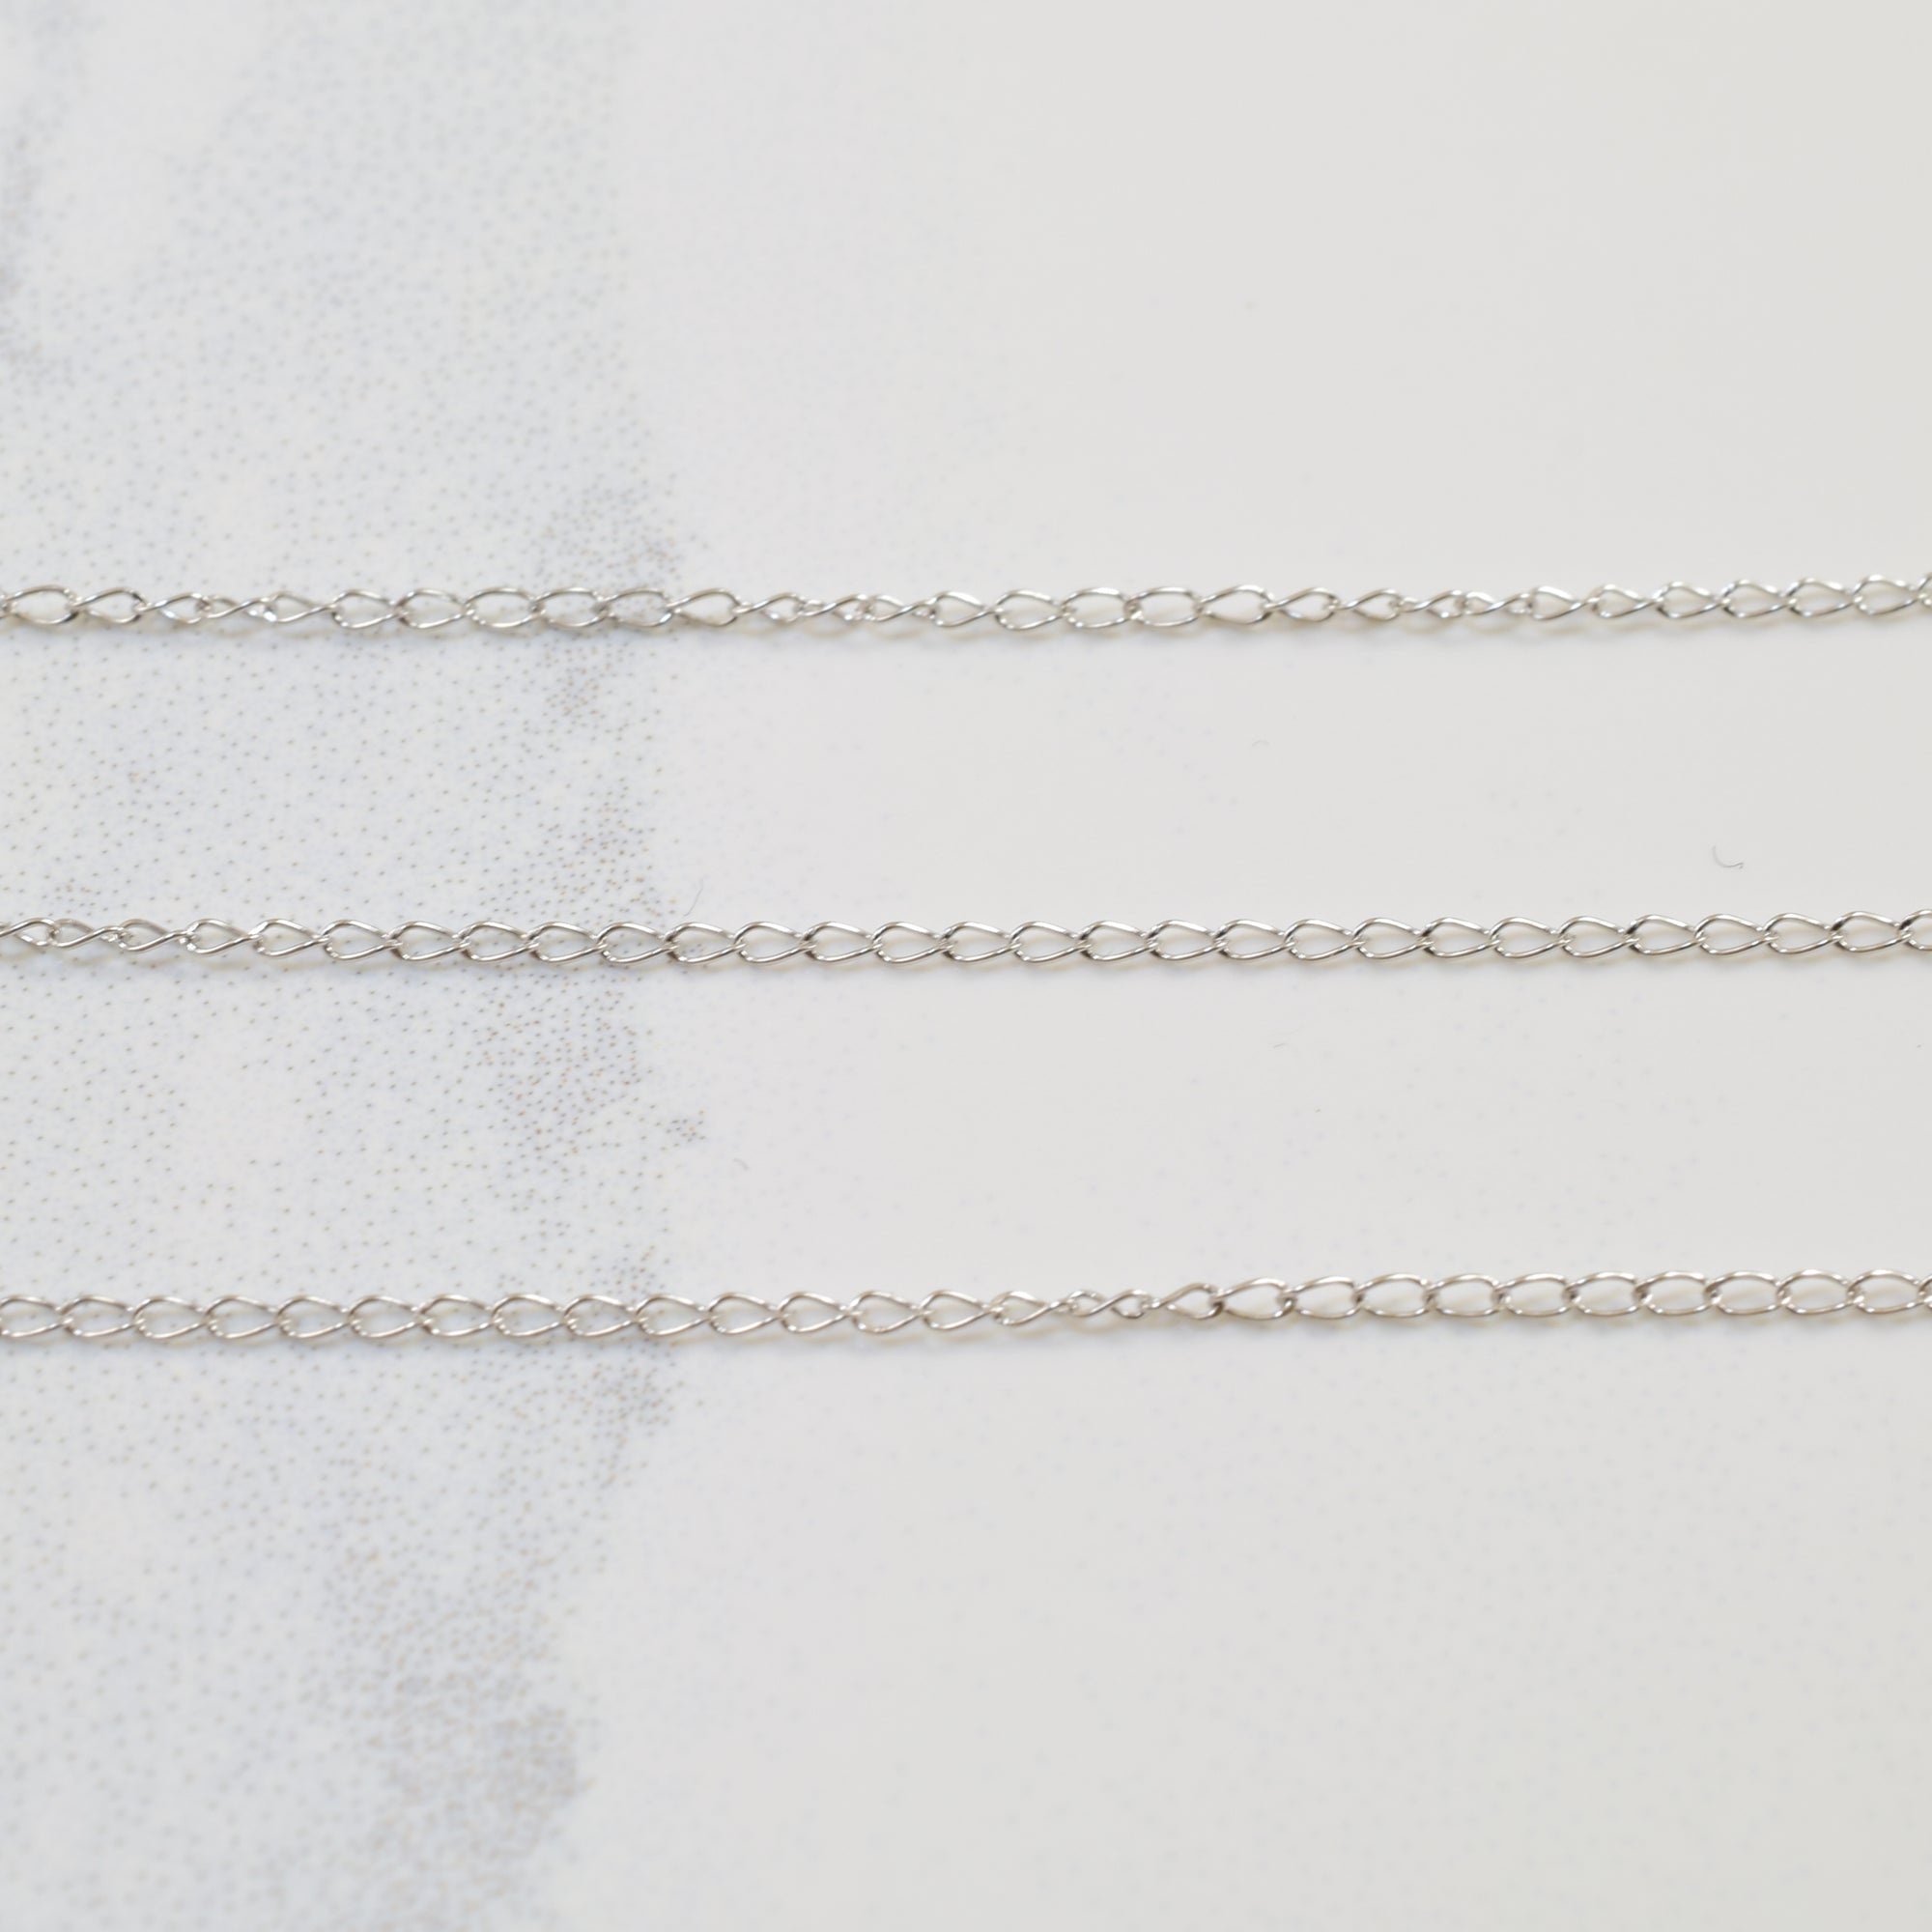 Solitaire Diamond Necklace | 0.12ct | 16